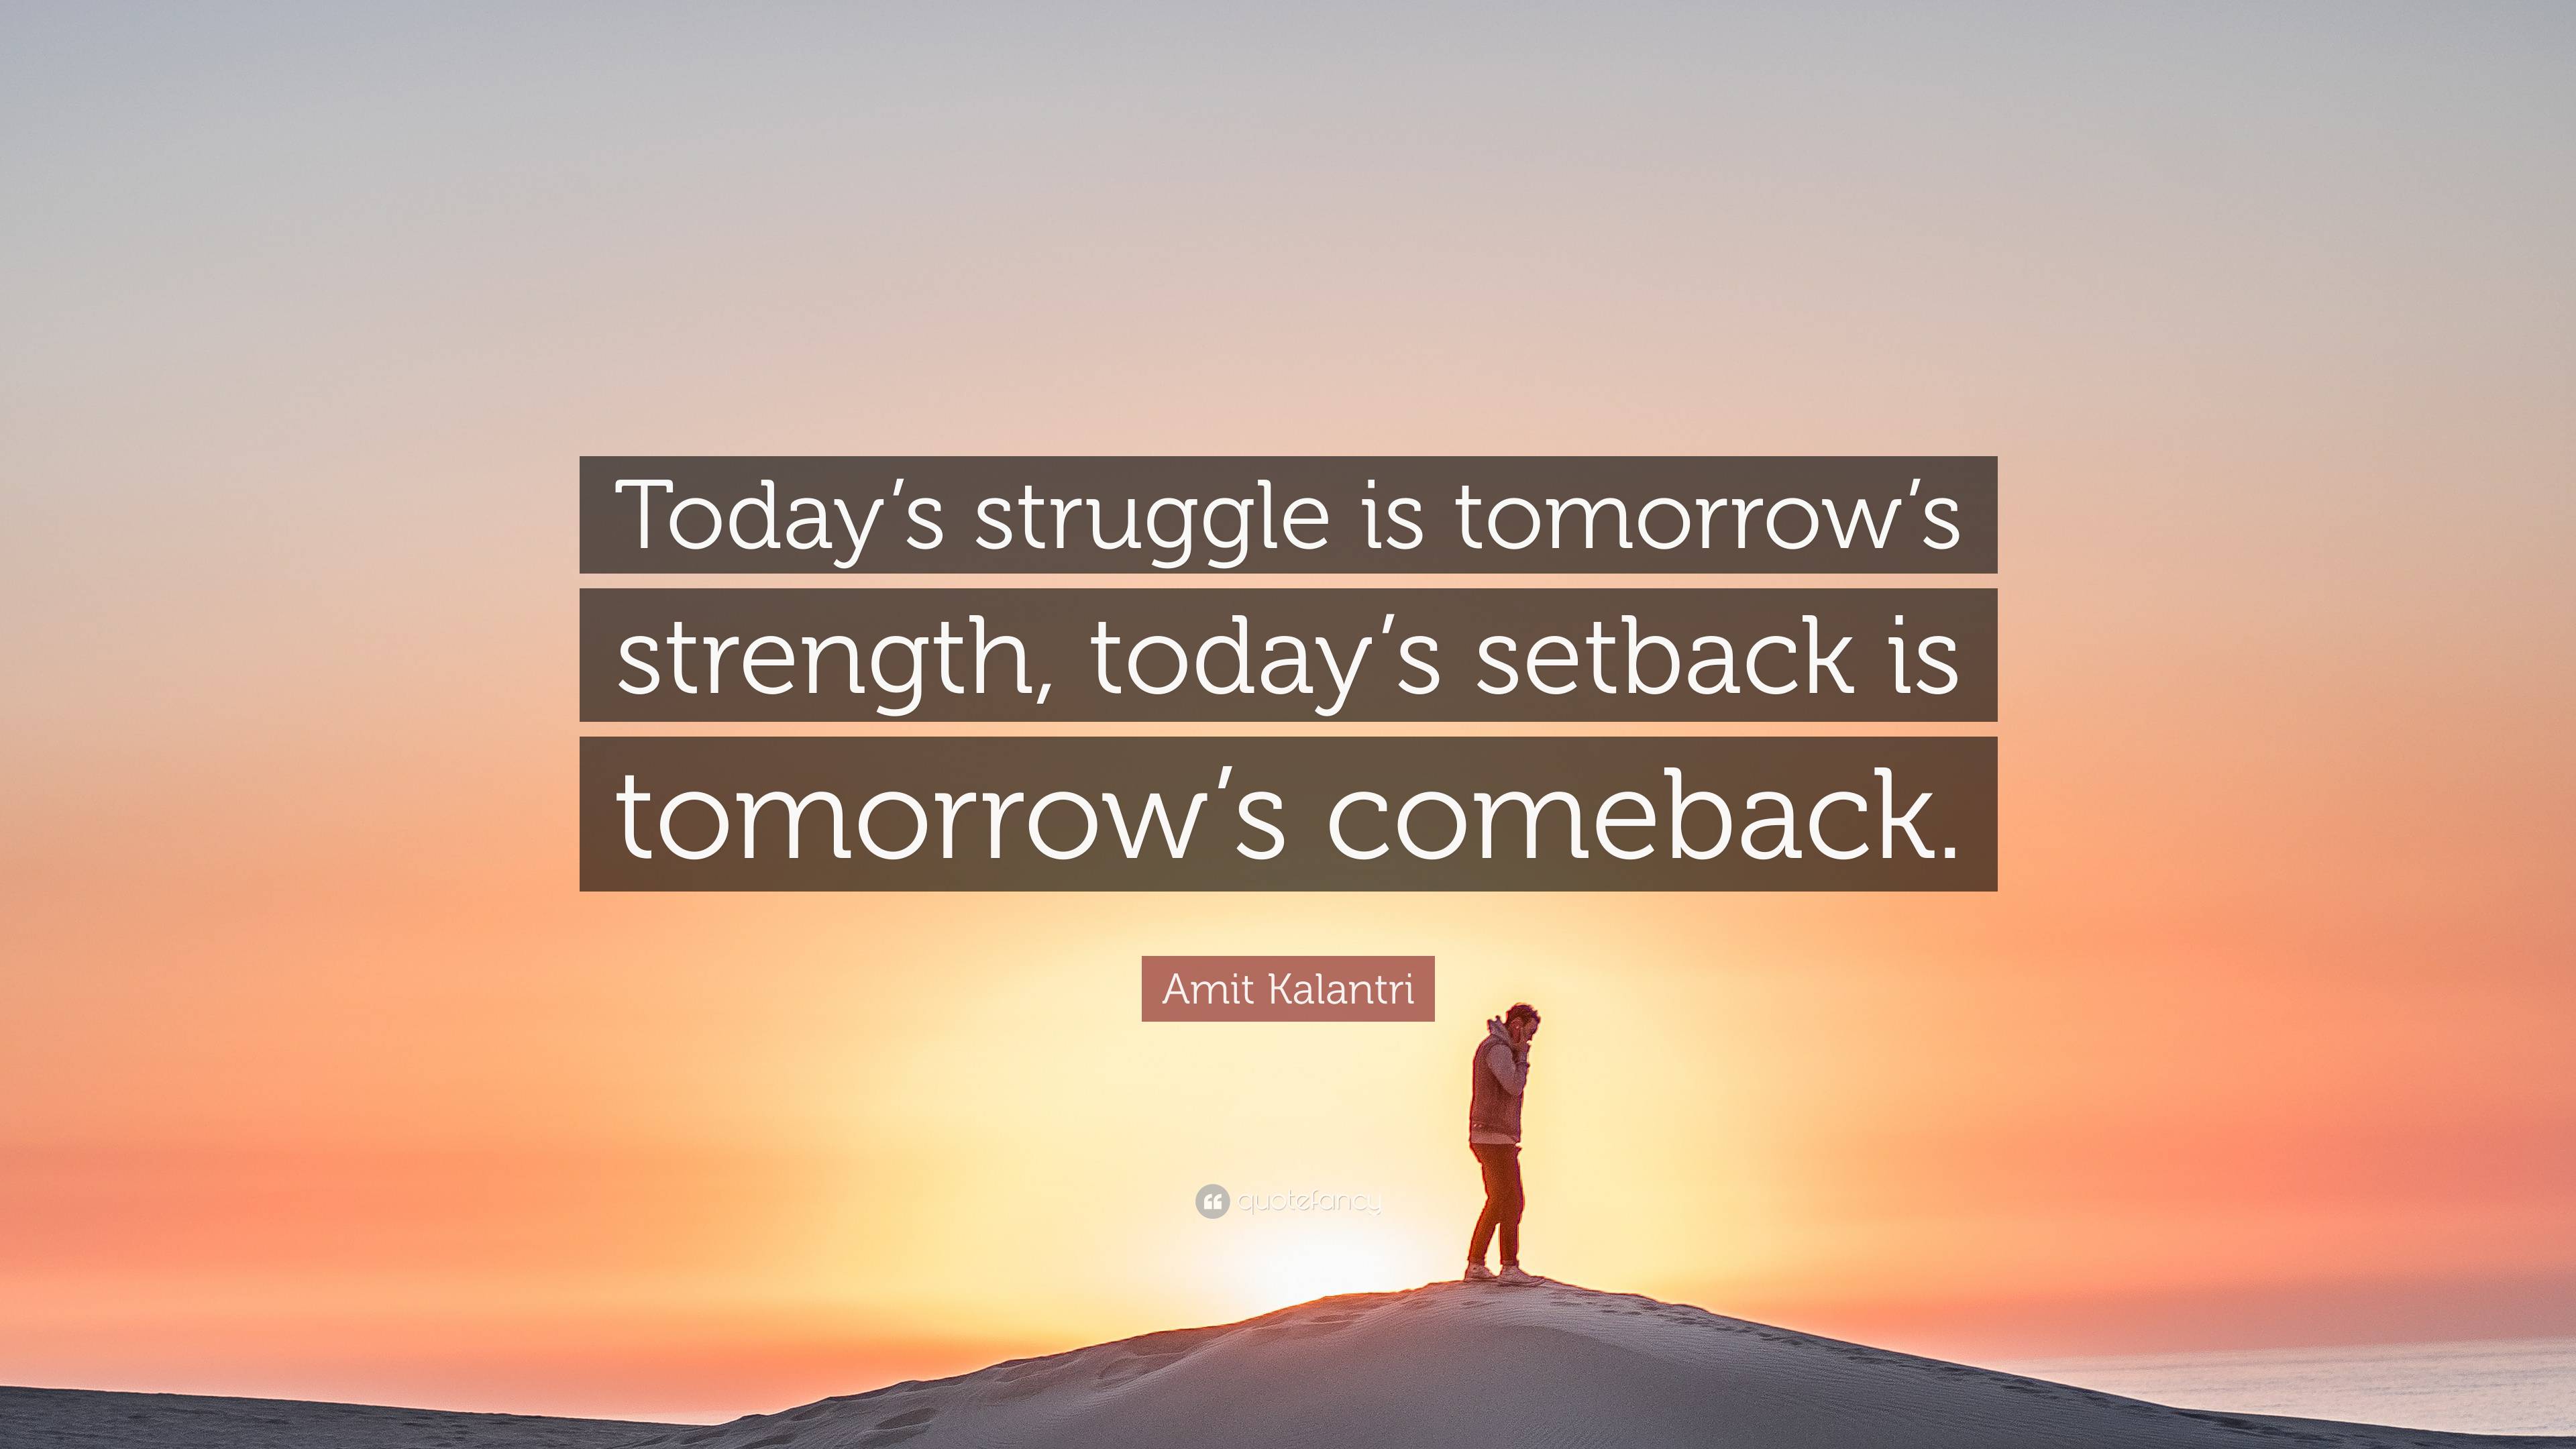 https://quotefancy.com/media/wallpaper/3840x2160/7533773-Amit-Kalantri-Quote-Today-s-struggle-is-tomorrow-s-strength-today.jpg